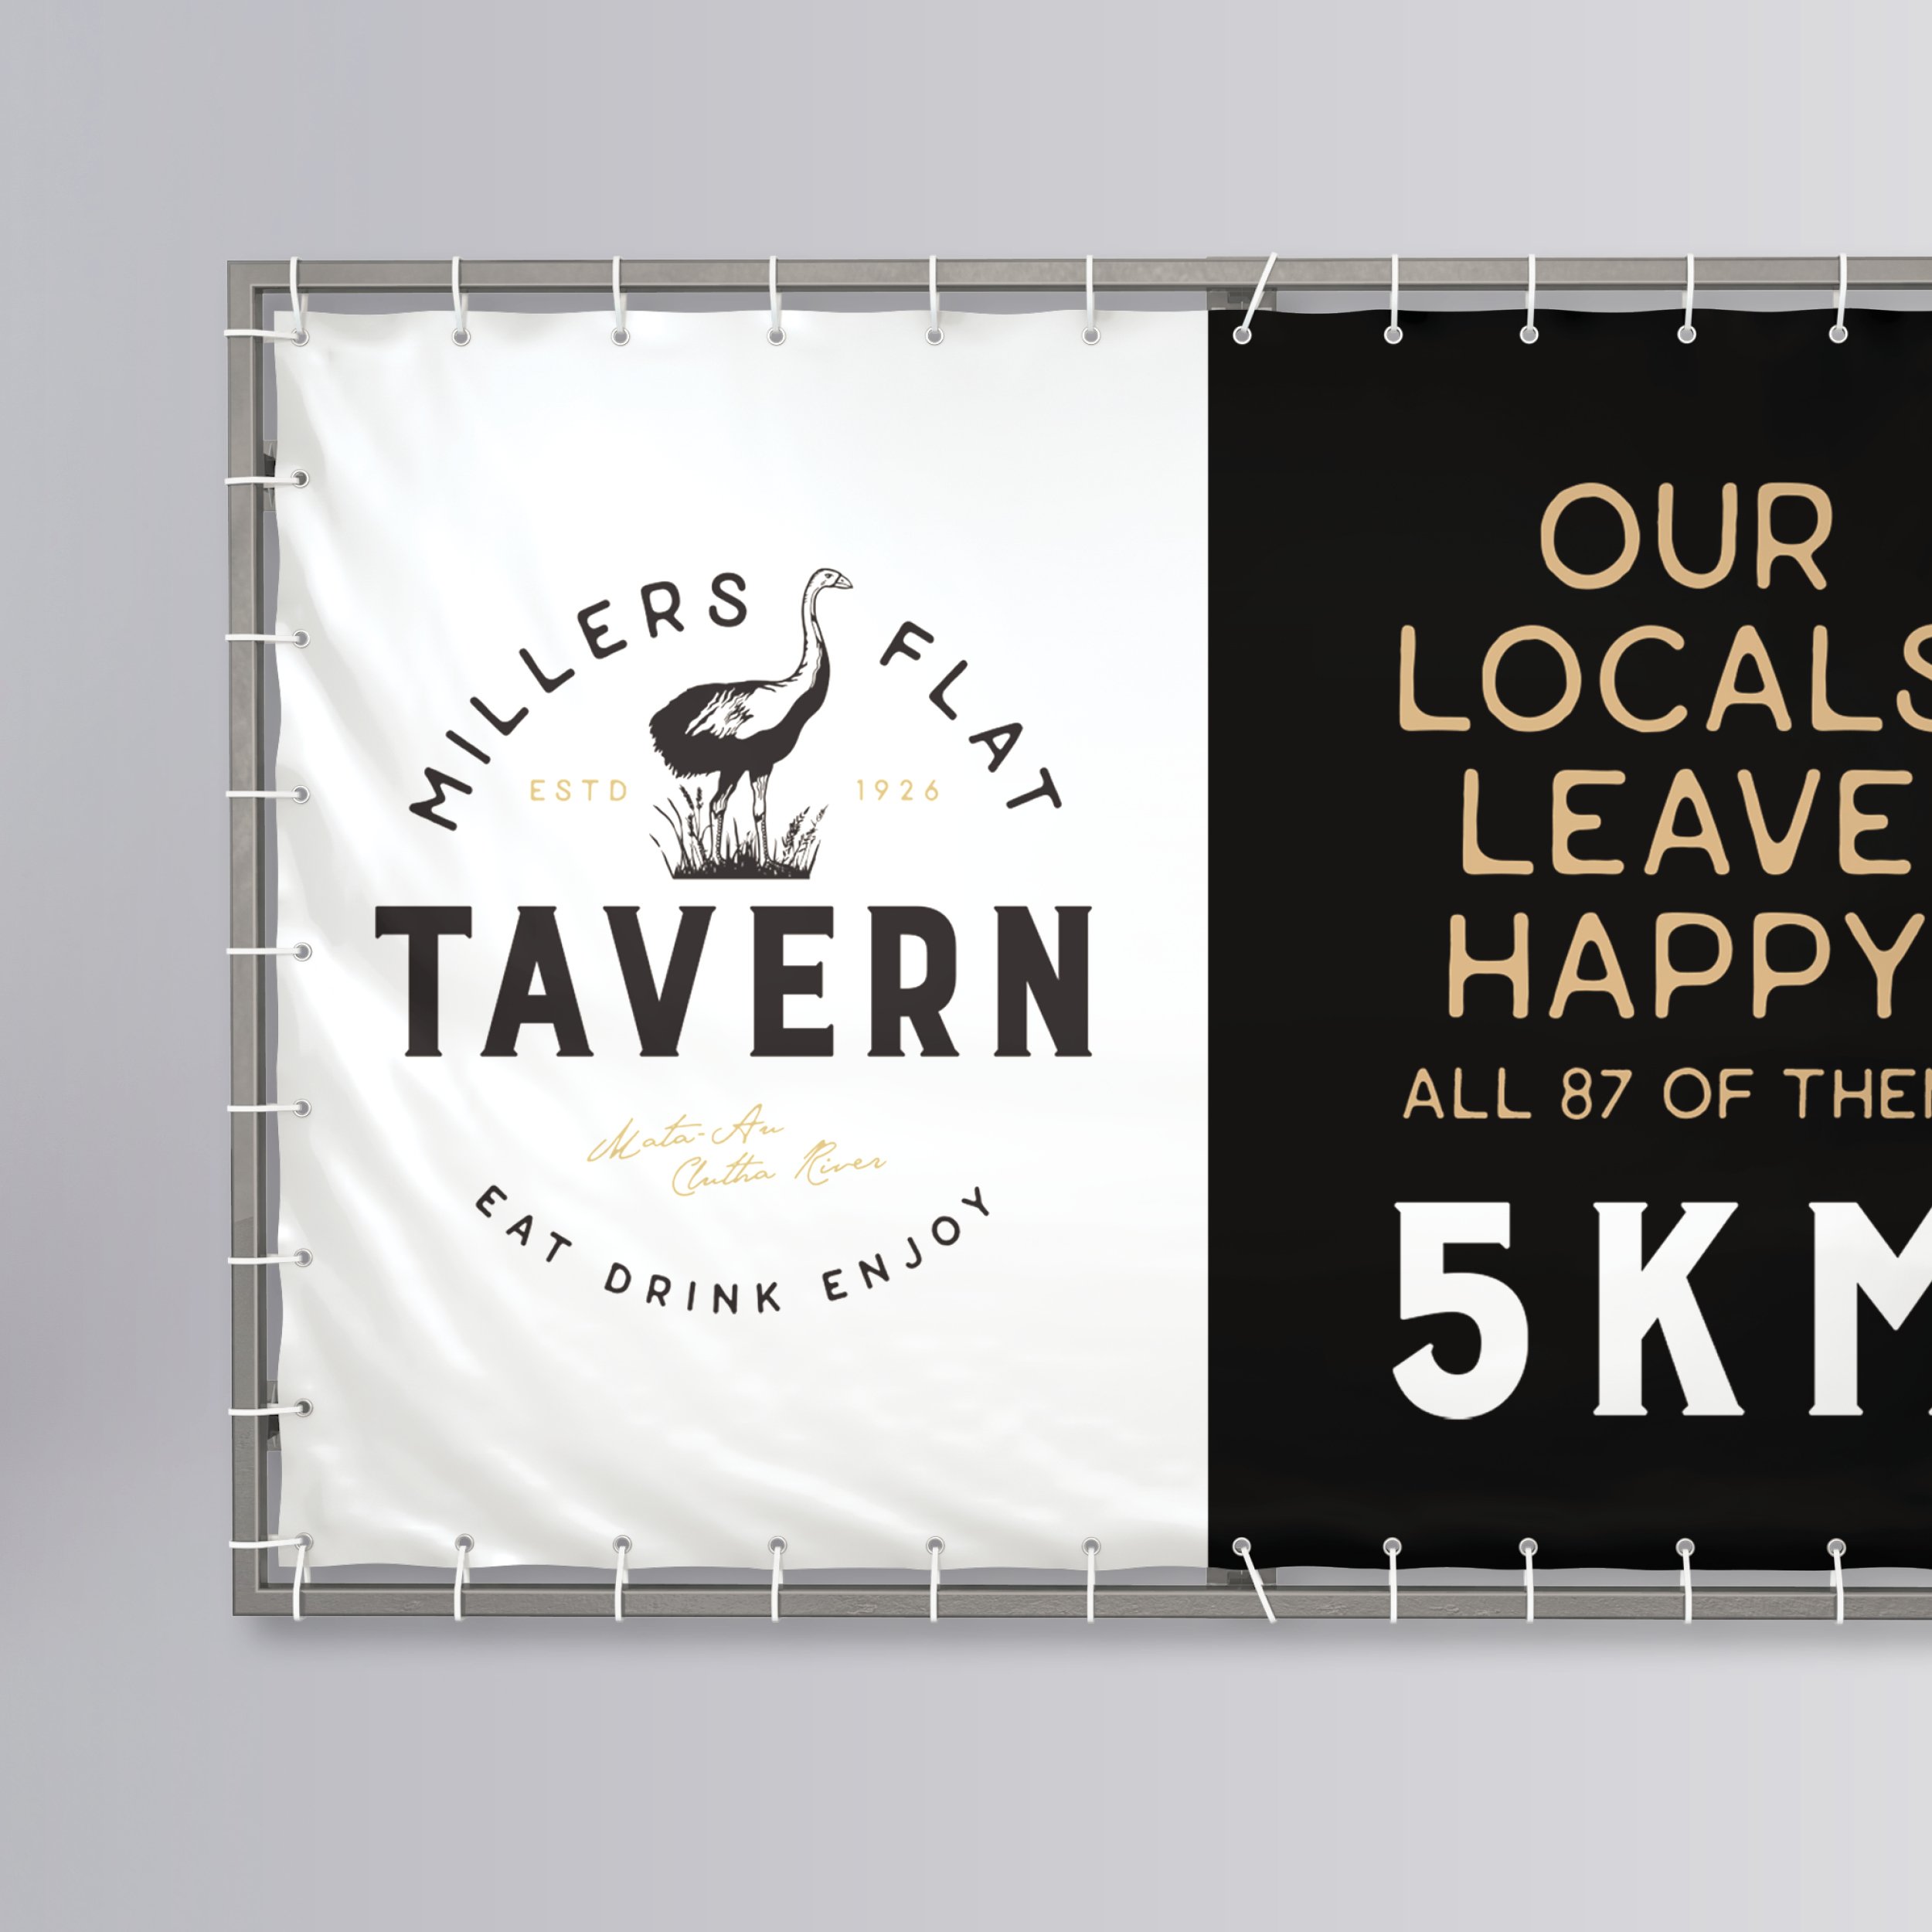 Millers Flat Tavern - Brand Launch Social Tiles3.jpg